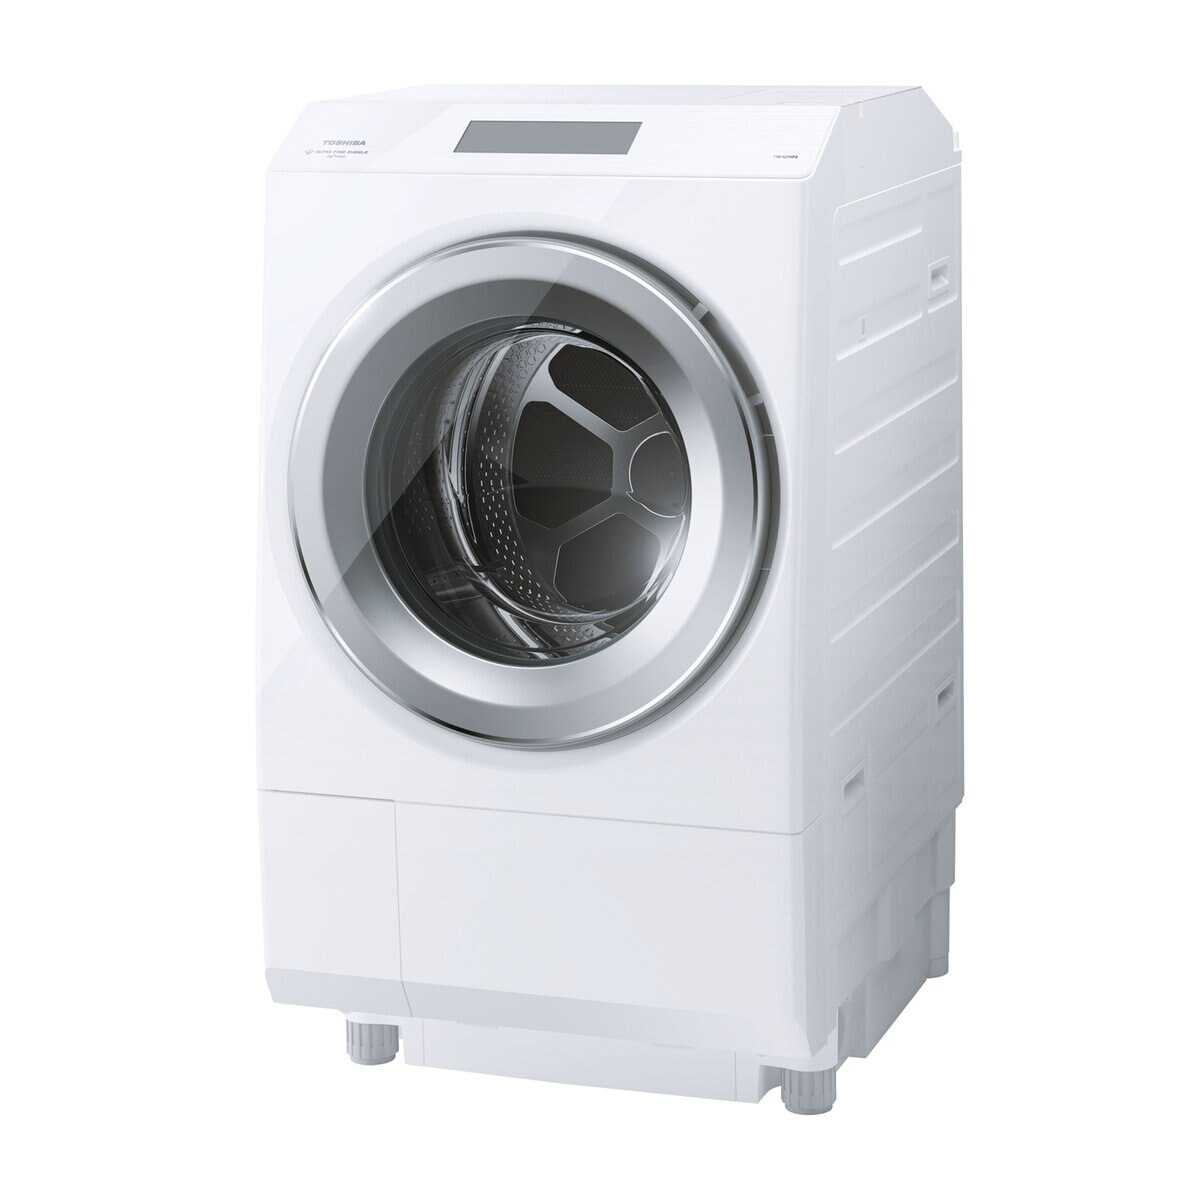 TOSHIBA ドラム式洗濯乾燥機 ZABOON 洗濯12kg 乾燥 7kg (W) ホワイト 